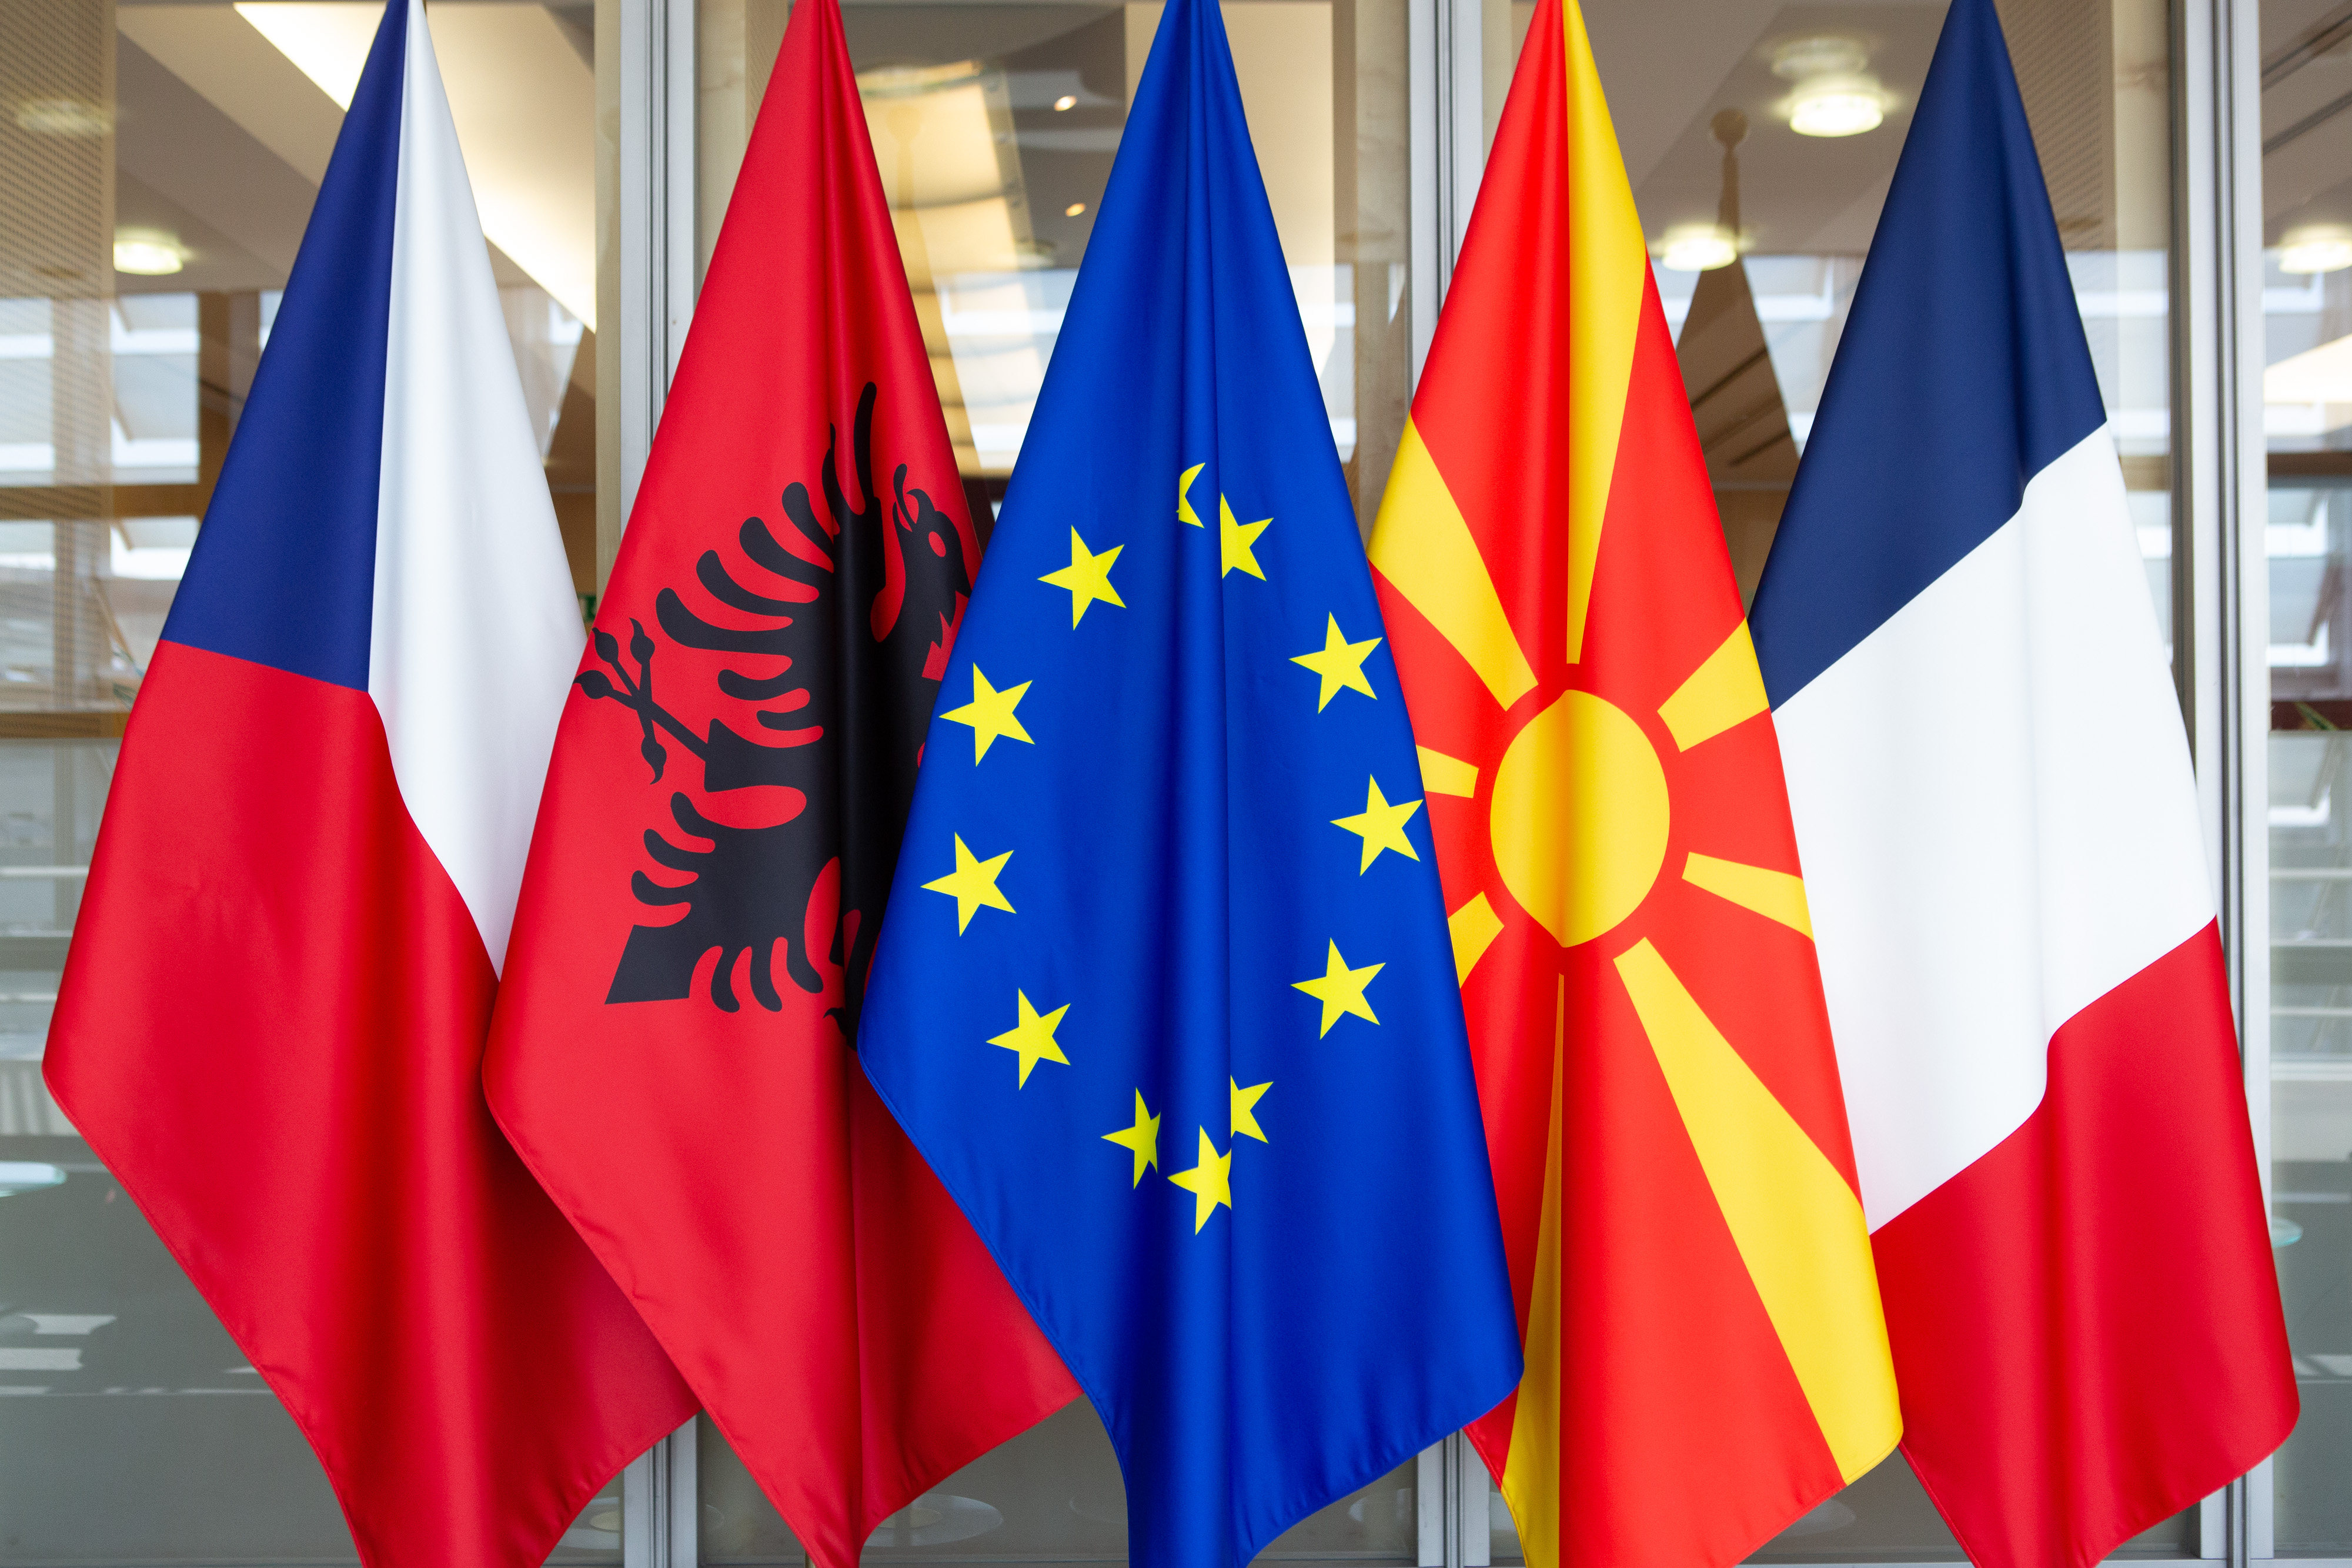 Albania and North Macedonia flags